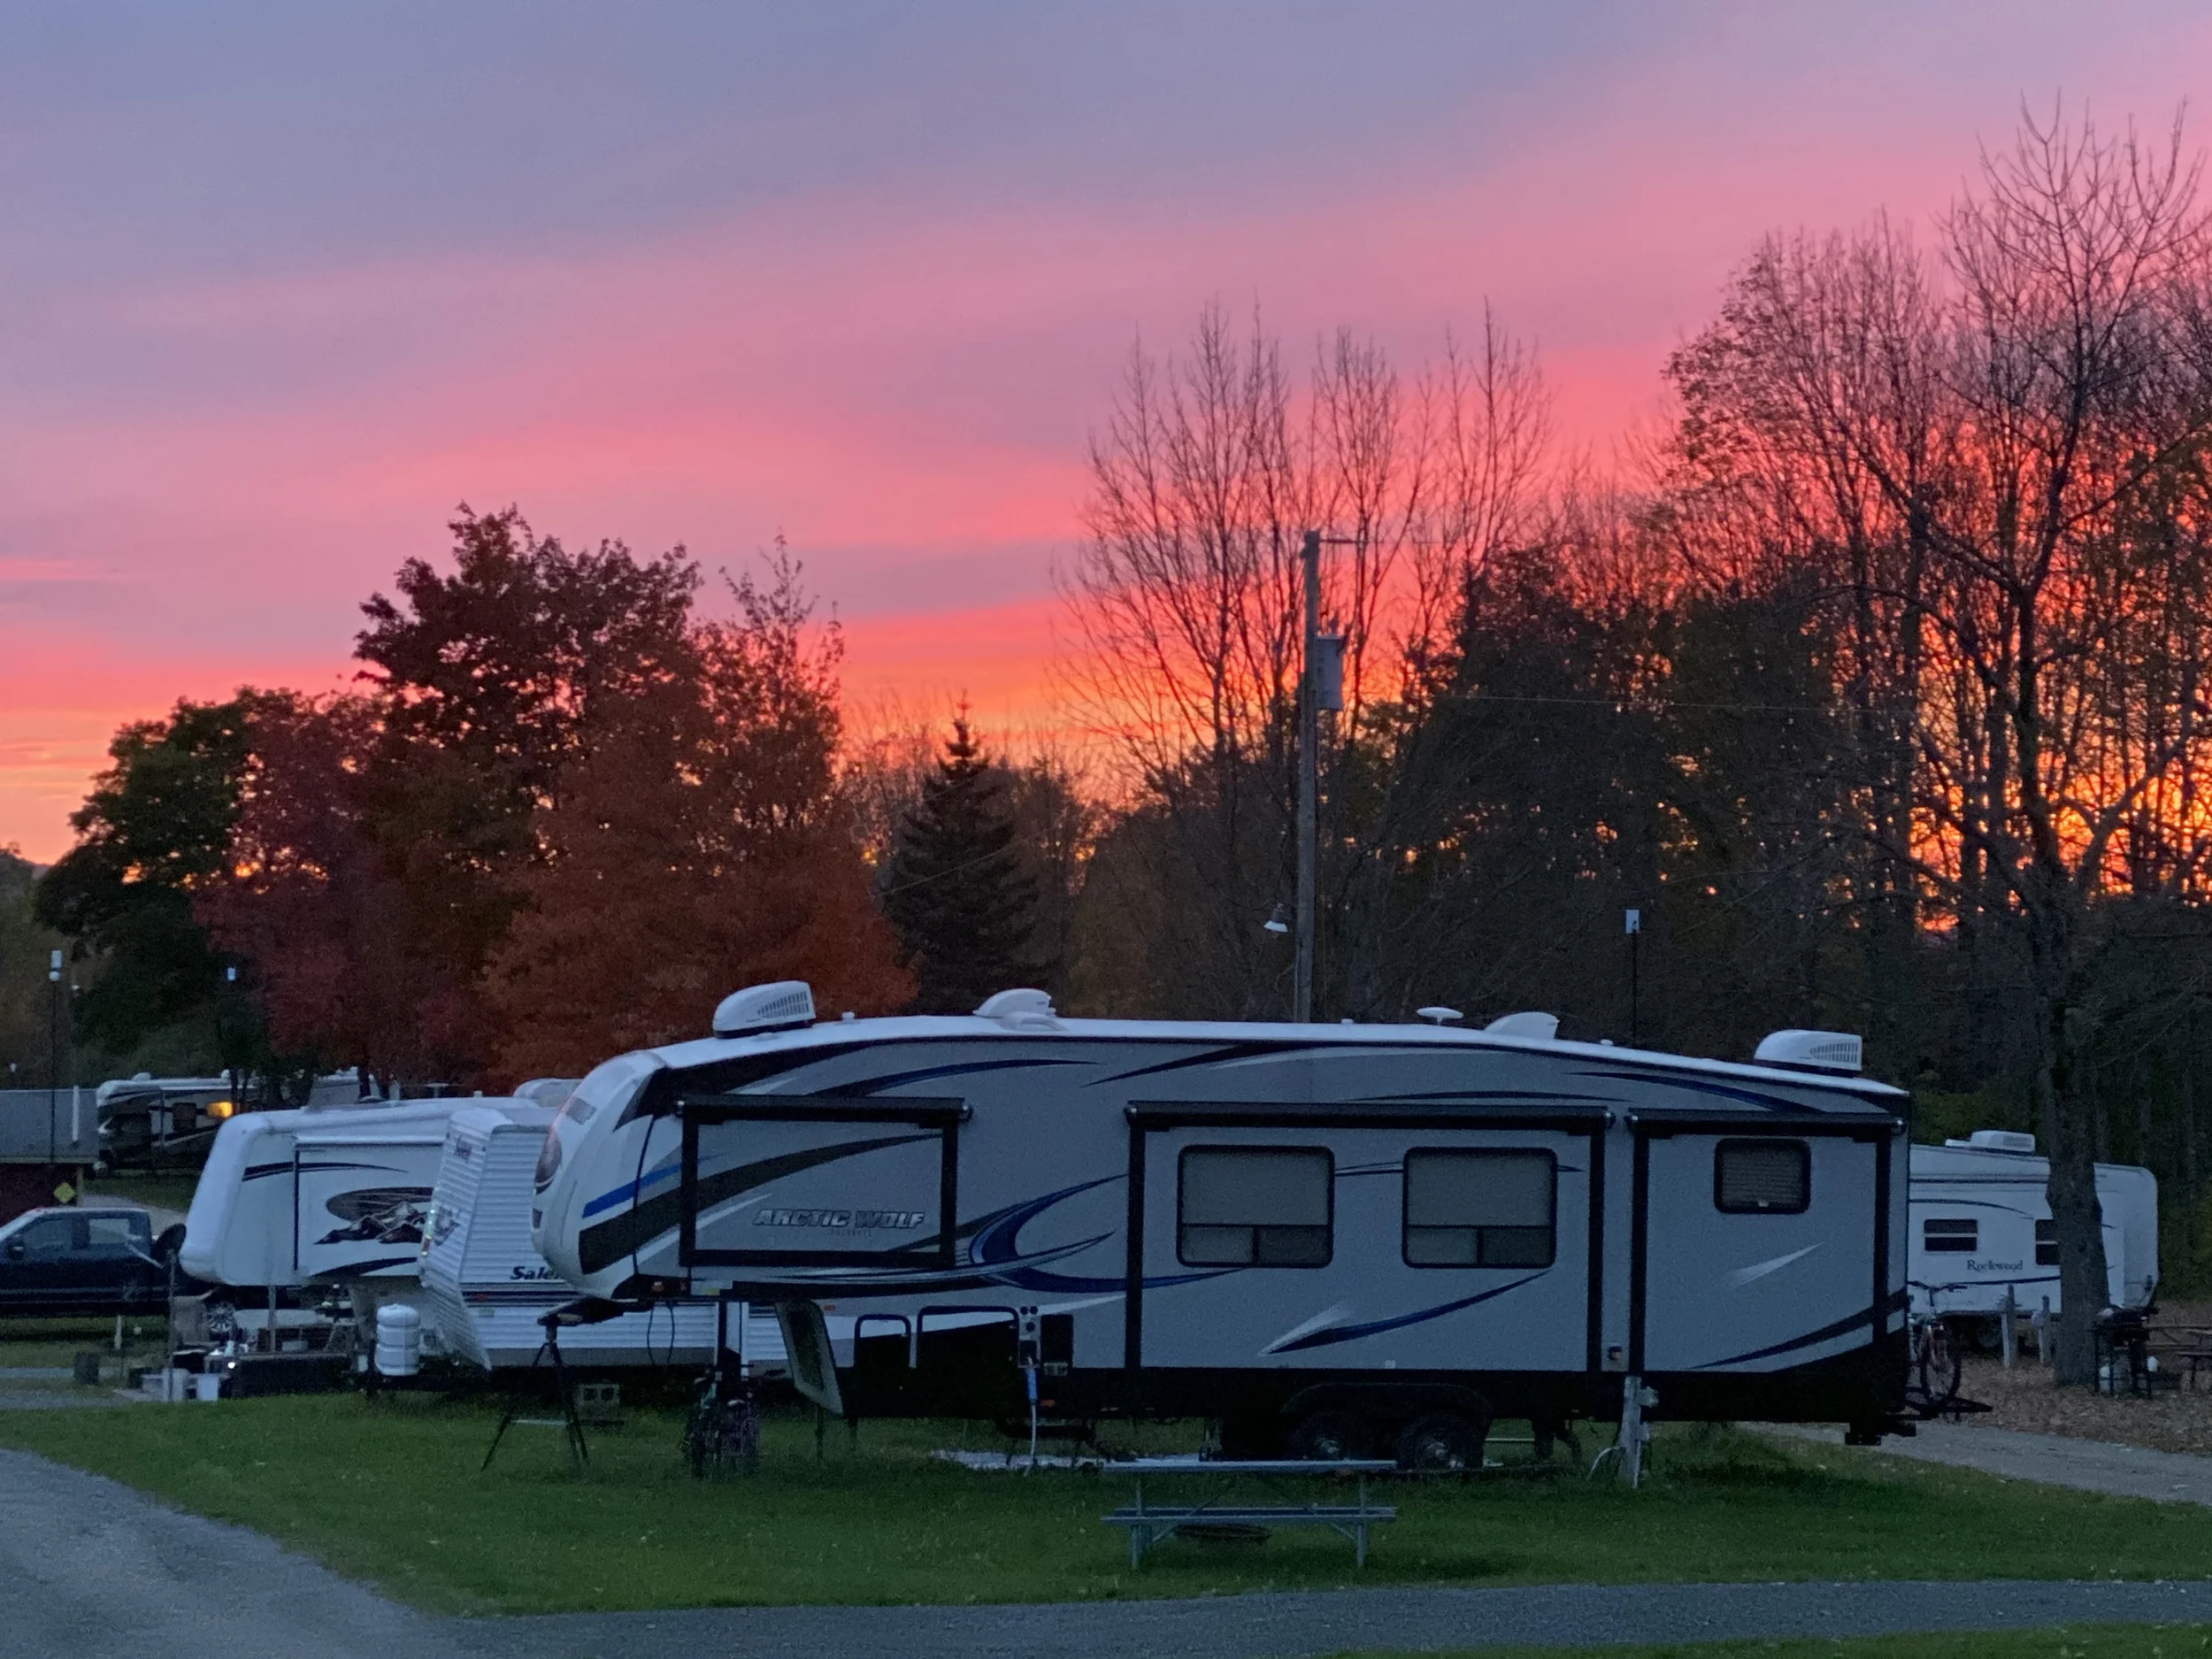 Purplish red sunset backdrop campers